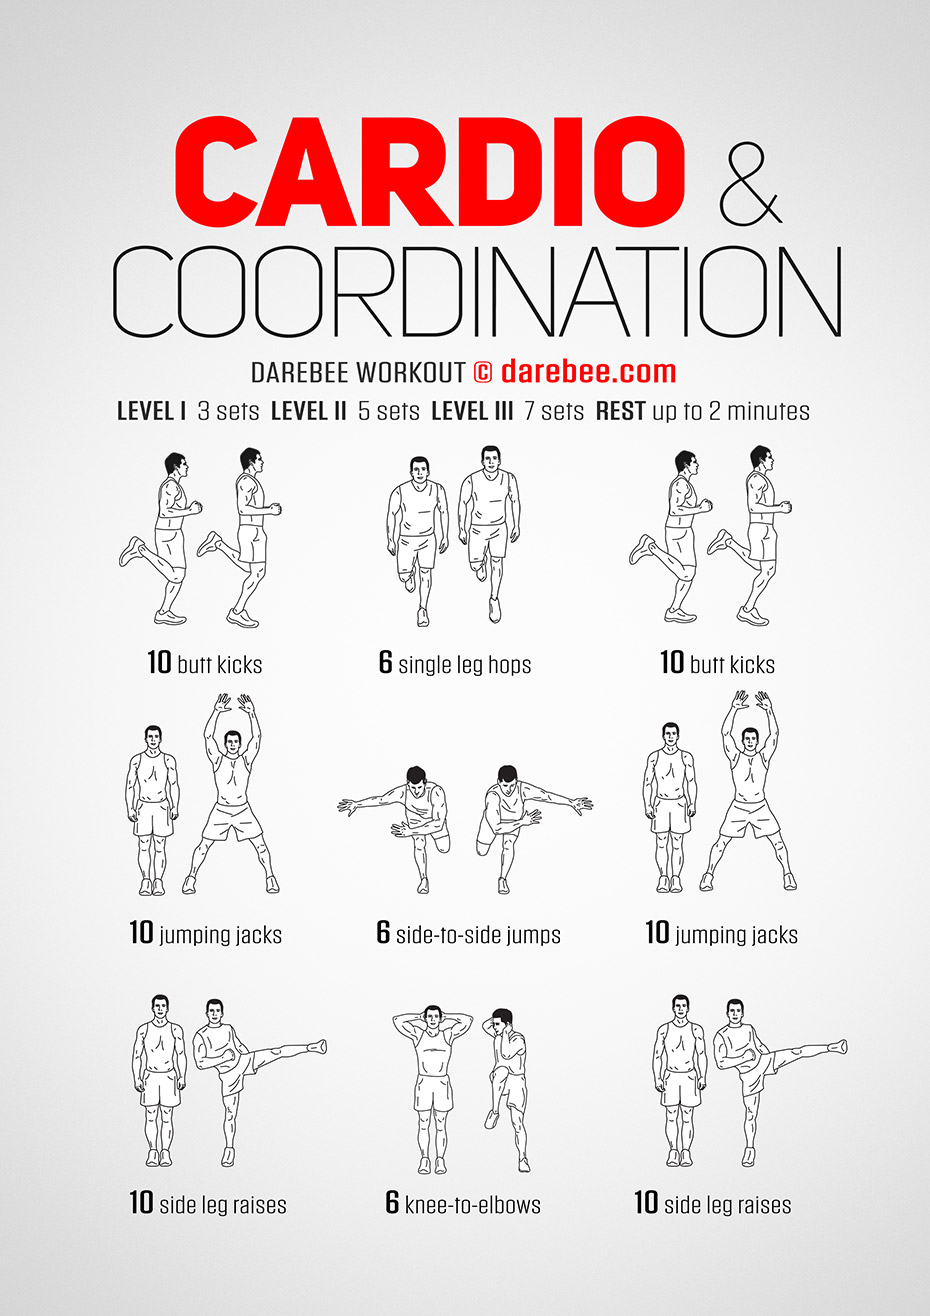 Cardio & Coordination Workout